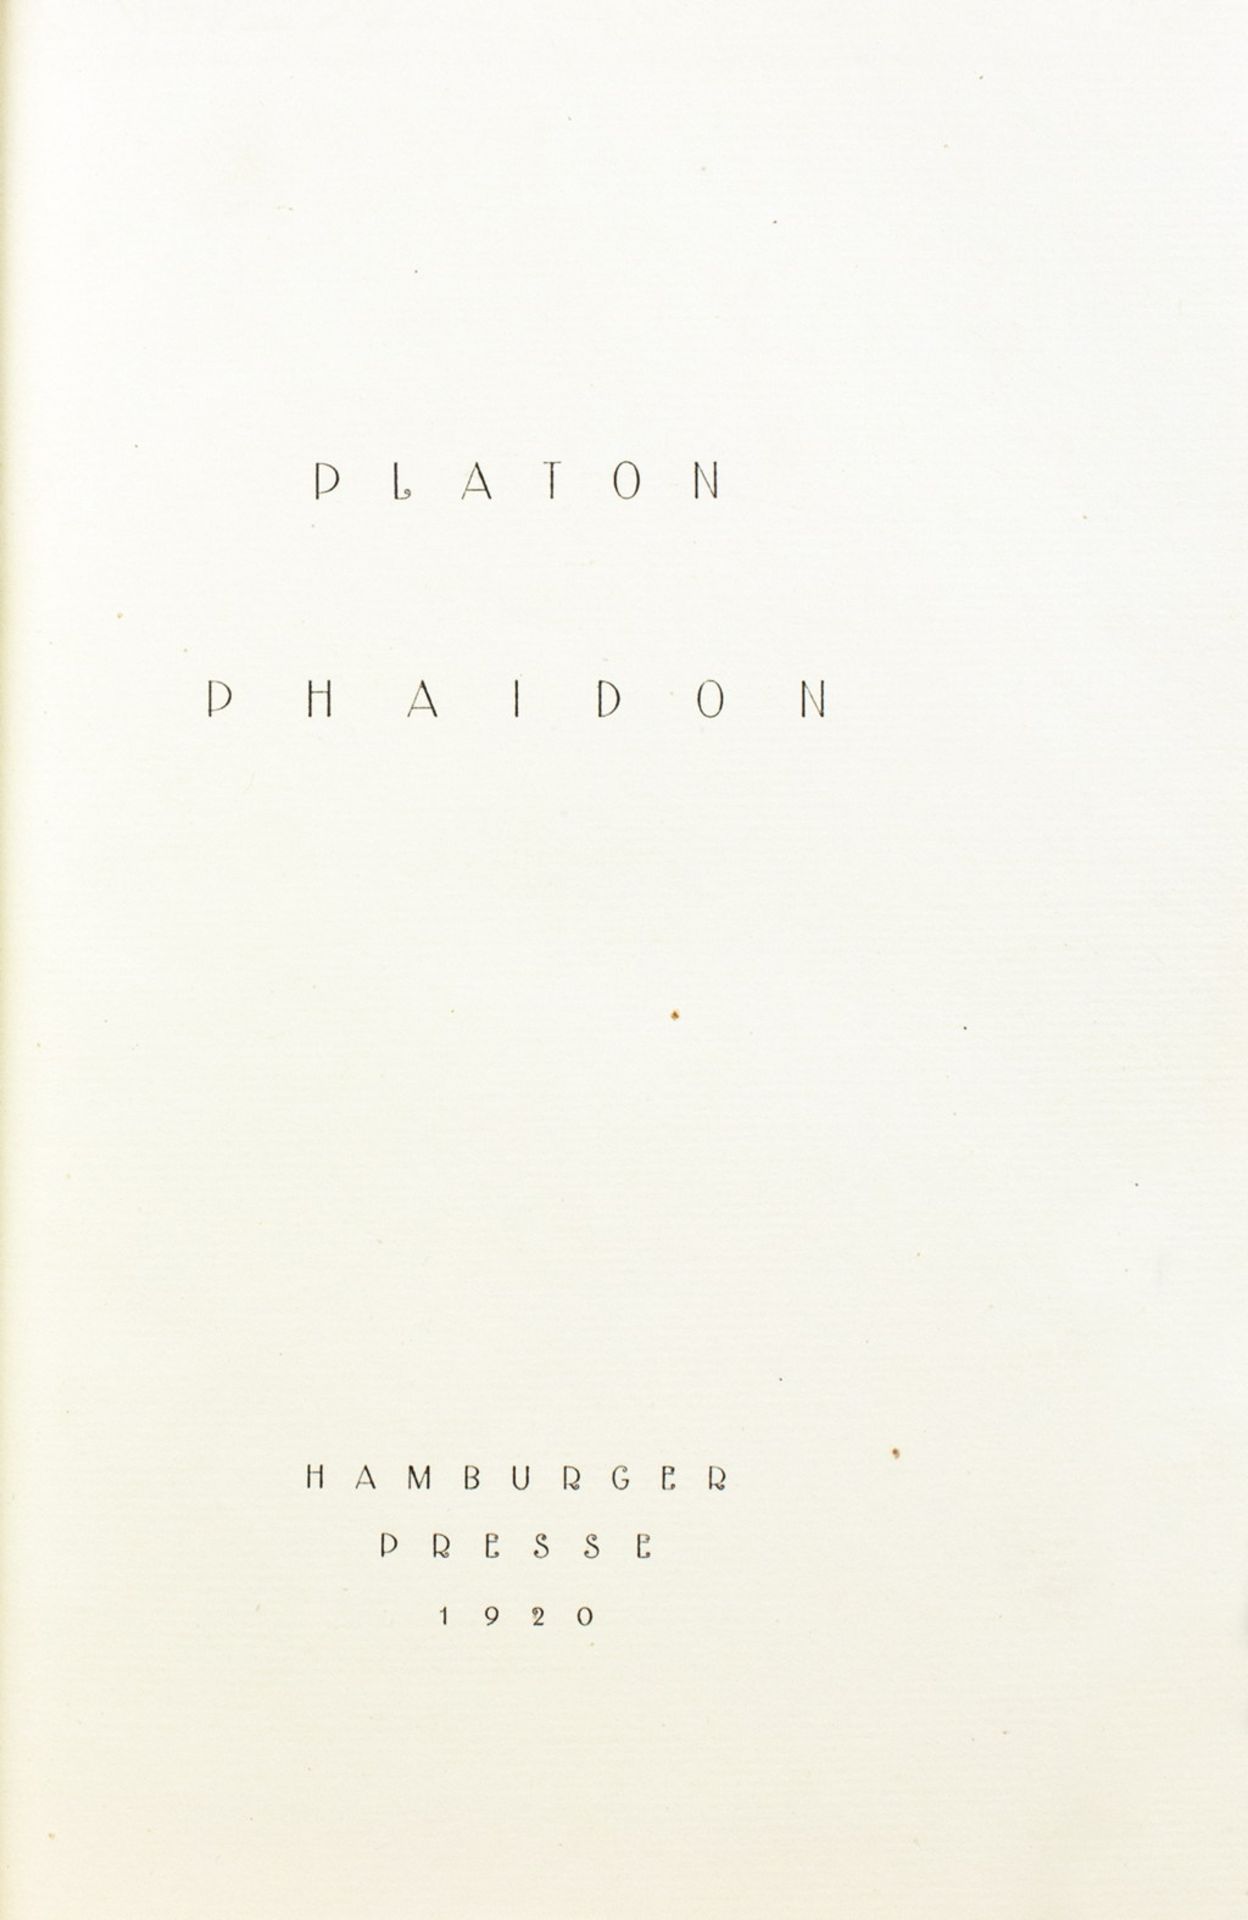 Hamburger Presse - Platon. Phaidon - Bild 2 aus 2